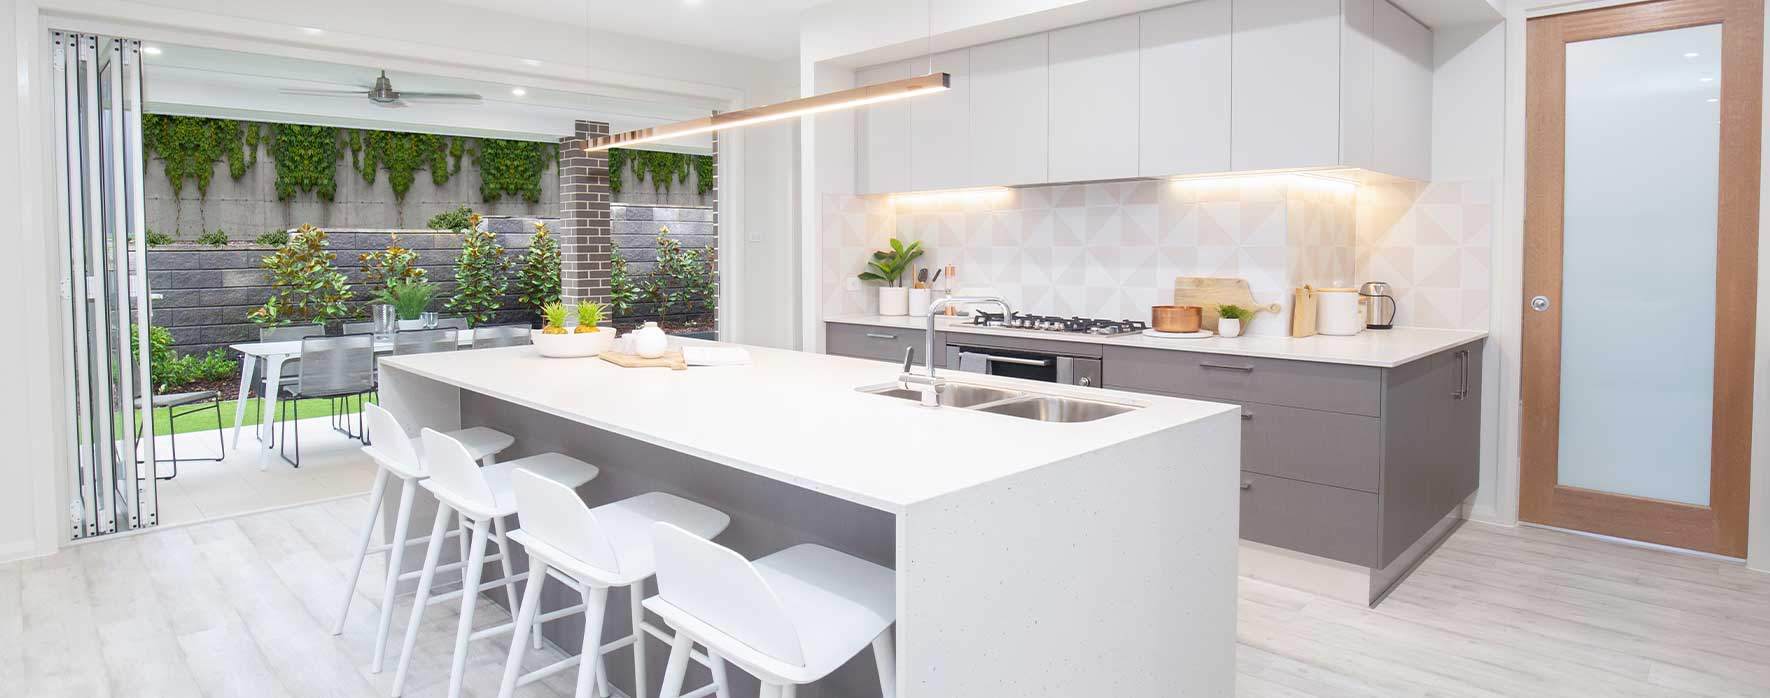 single-storey-house-design-kitchen-outdoor-living